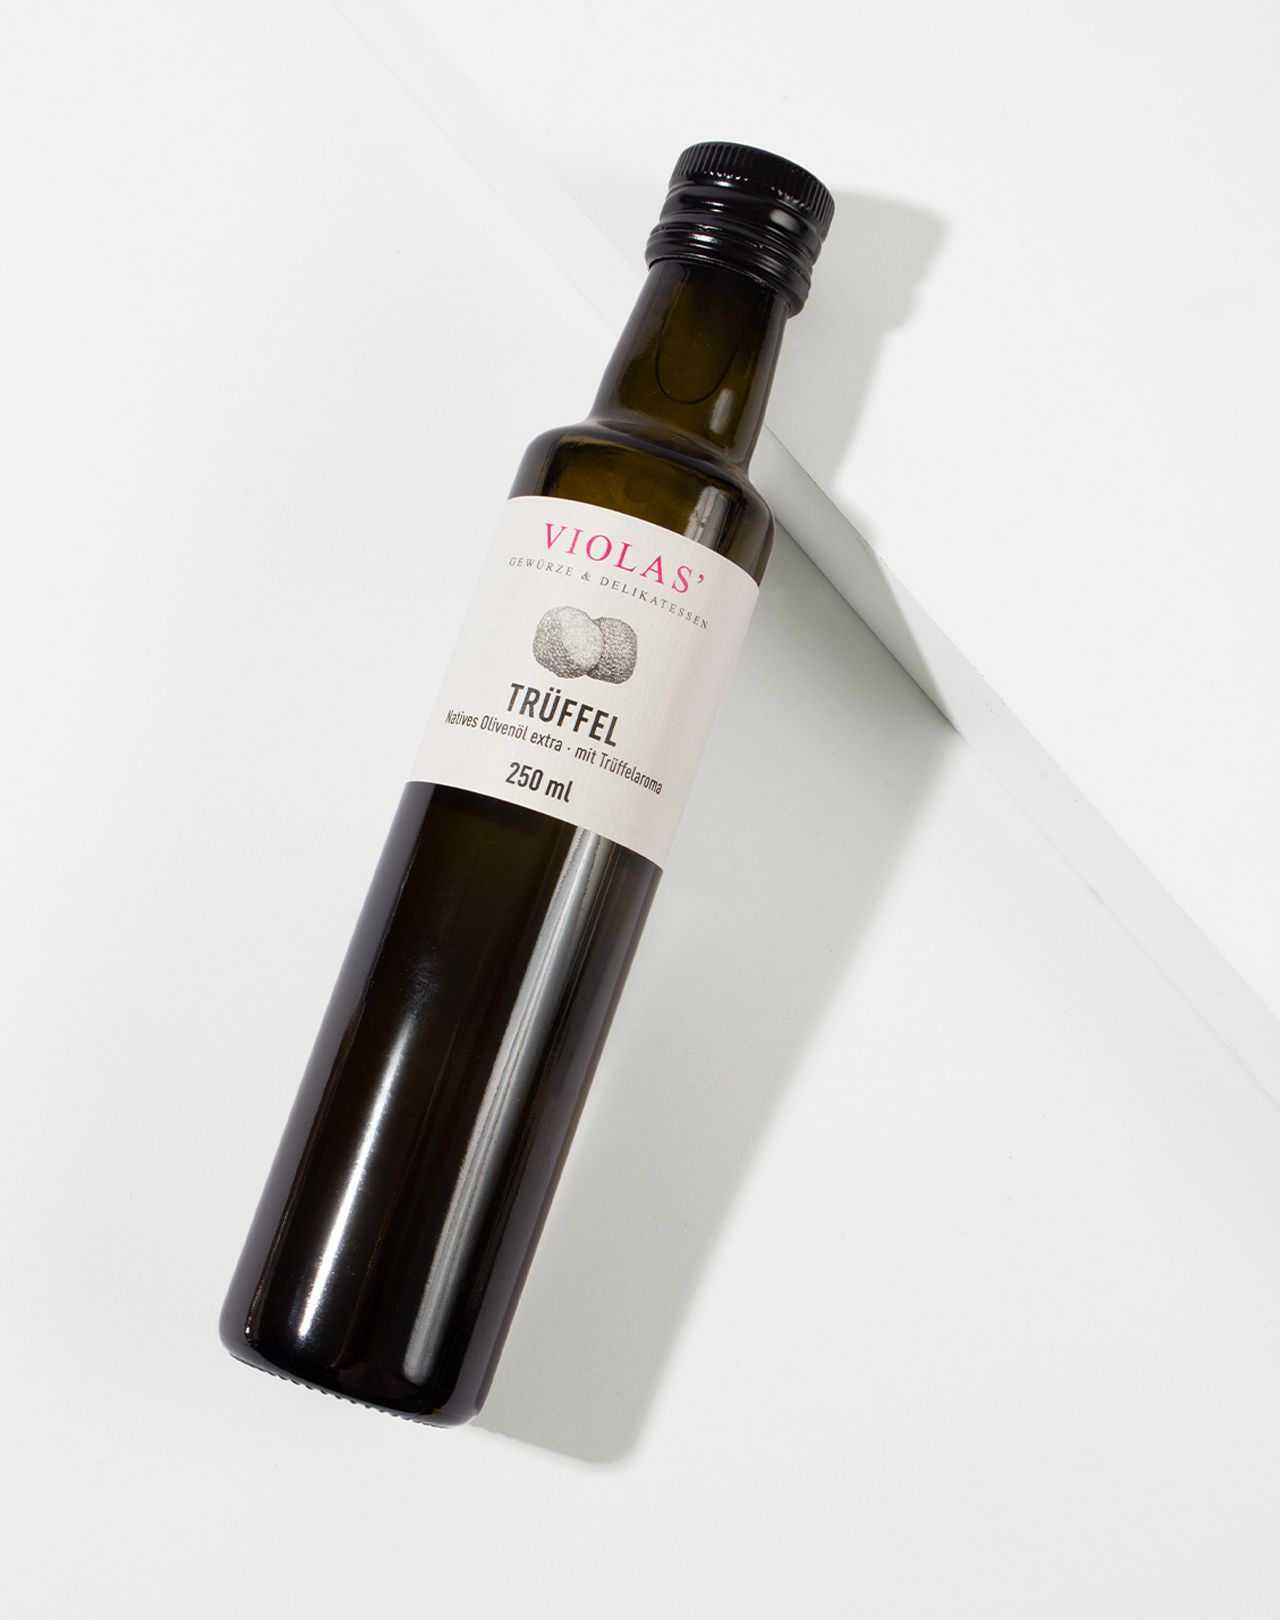 VIOLAS’ Olivenöl »Trüffel«